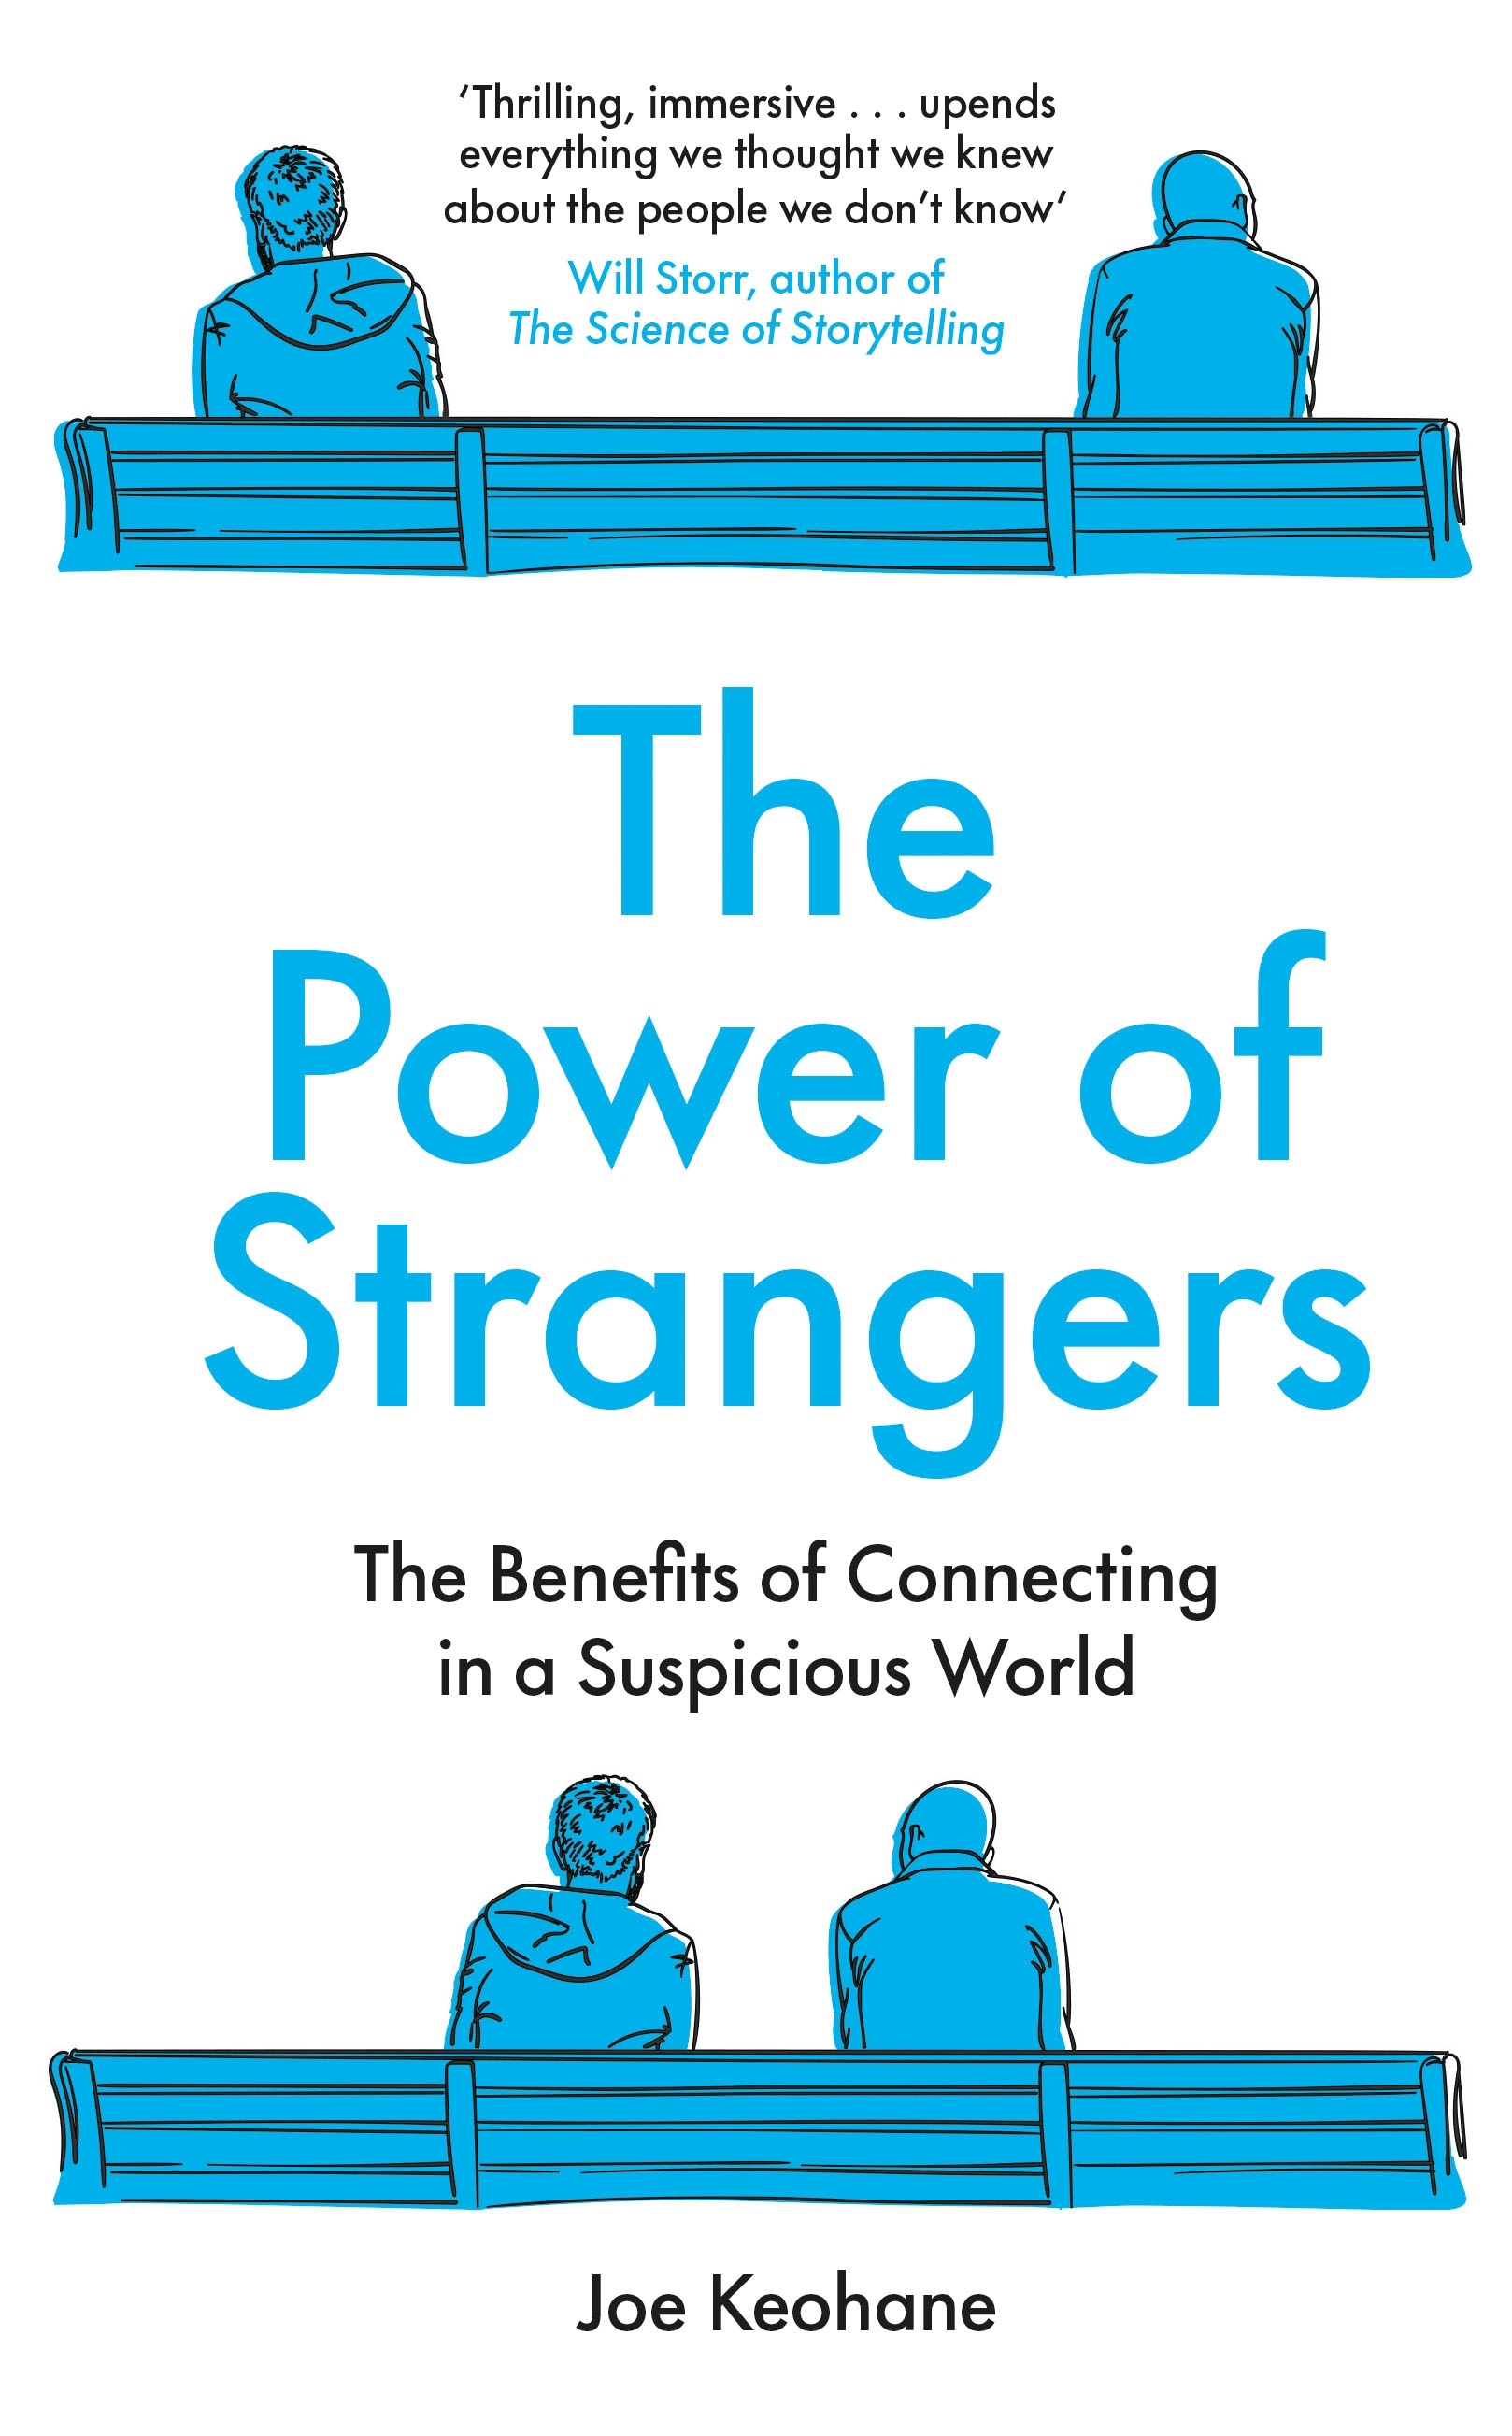 Book “The Power of Strangers” by Joe Keohane — July 15, 2021